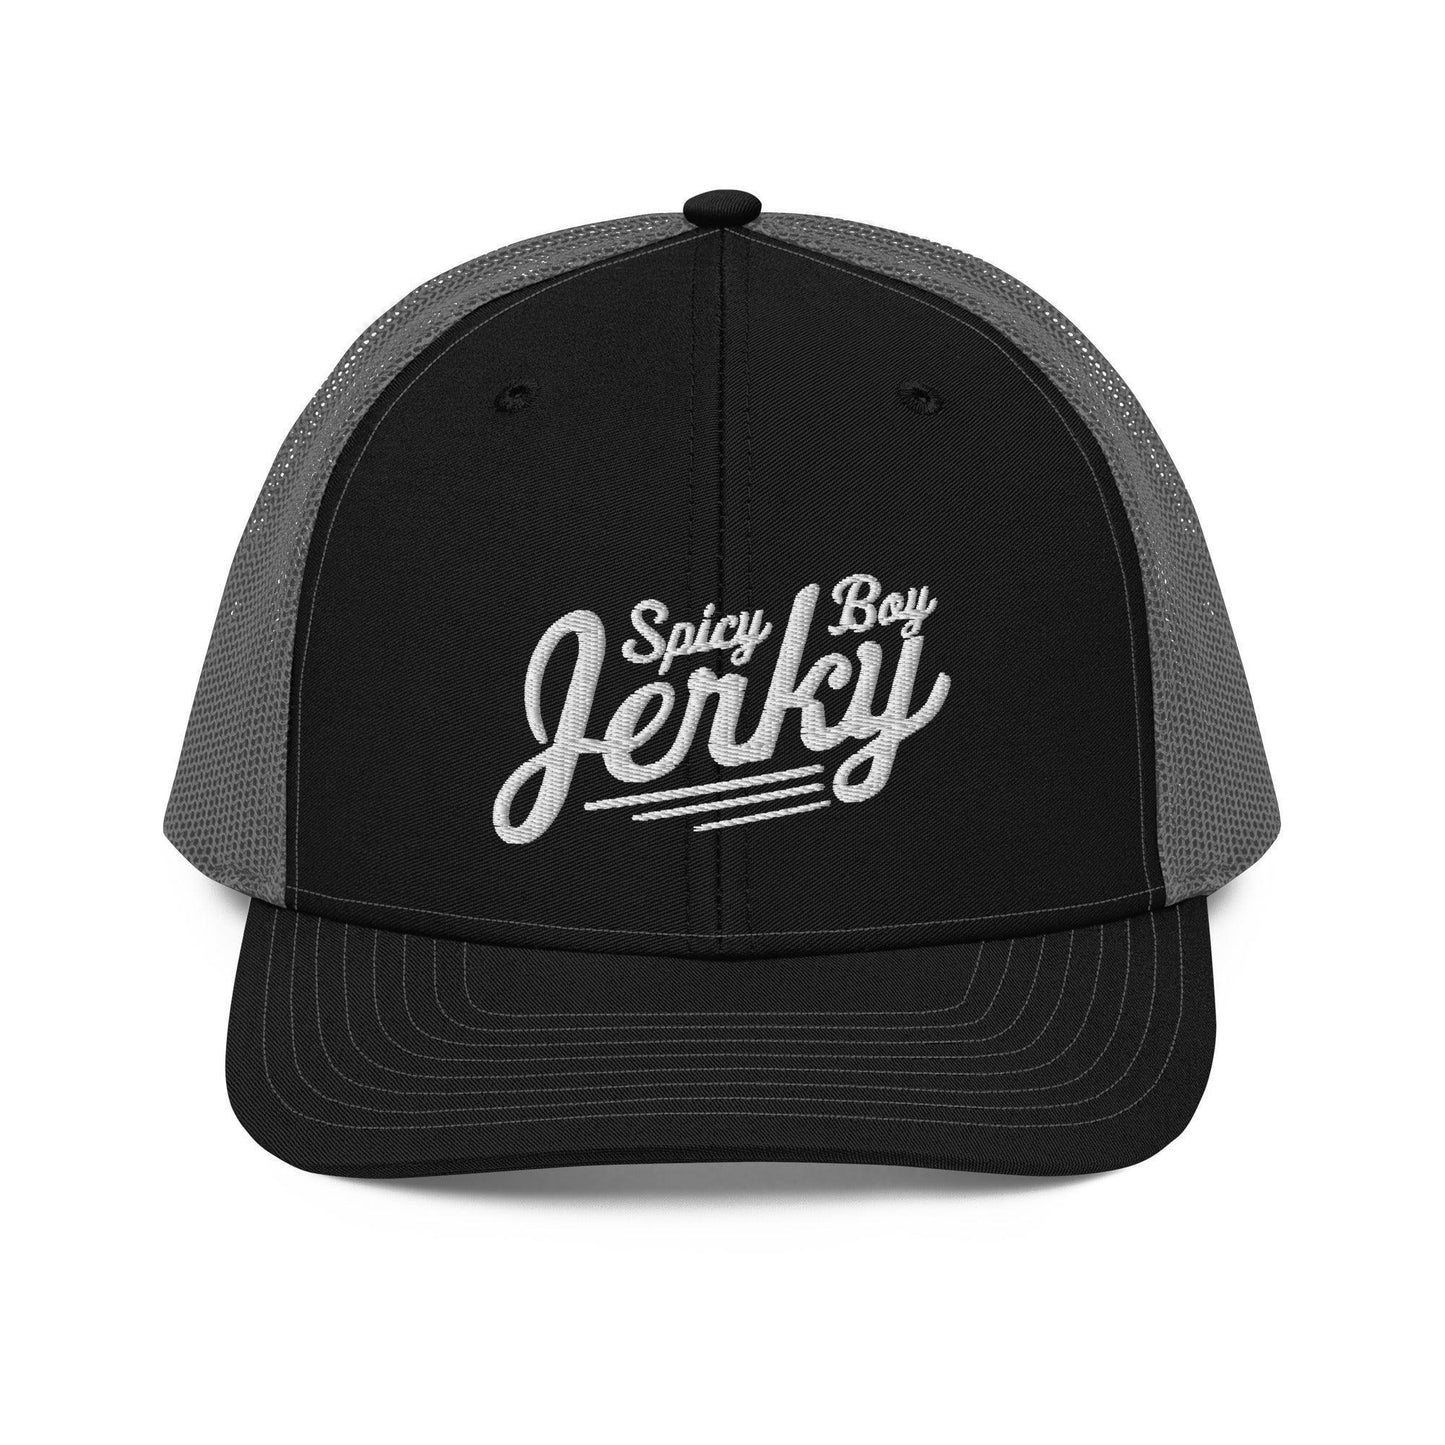 Spicy Boy Trucker Hat - Spicy Boy Jerky